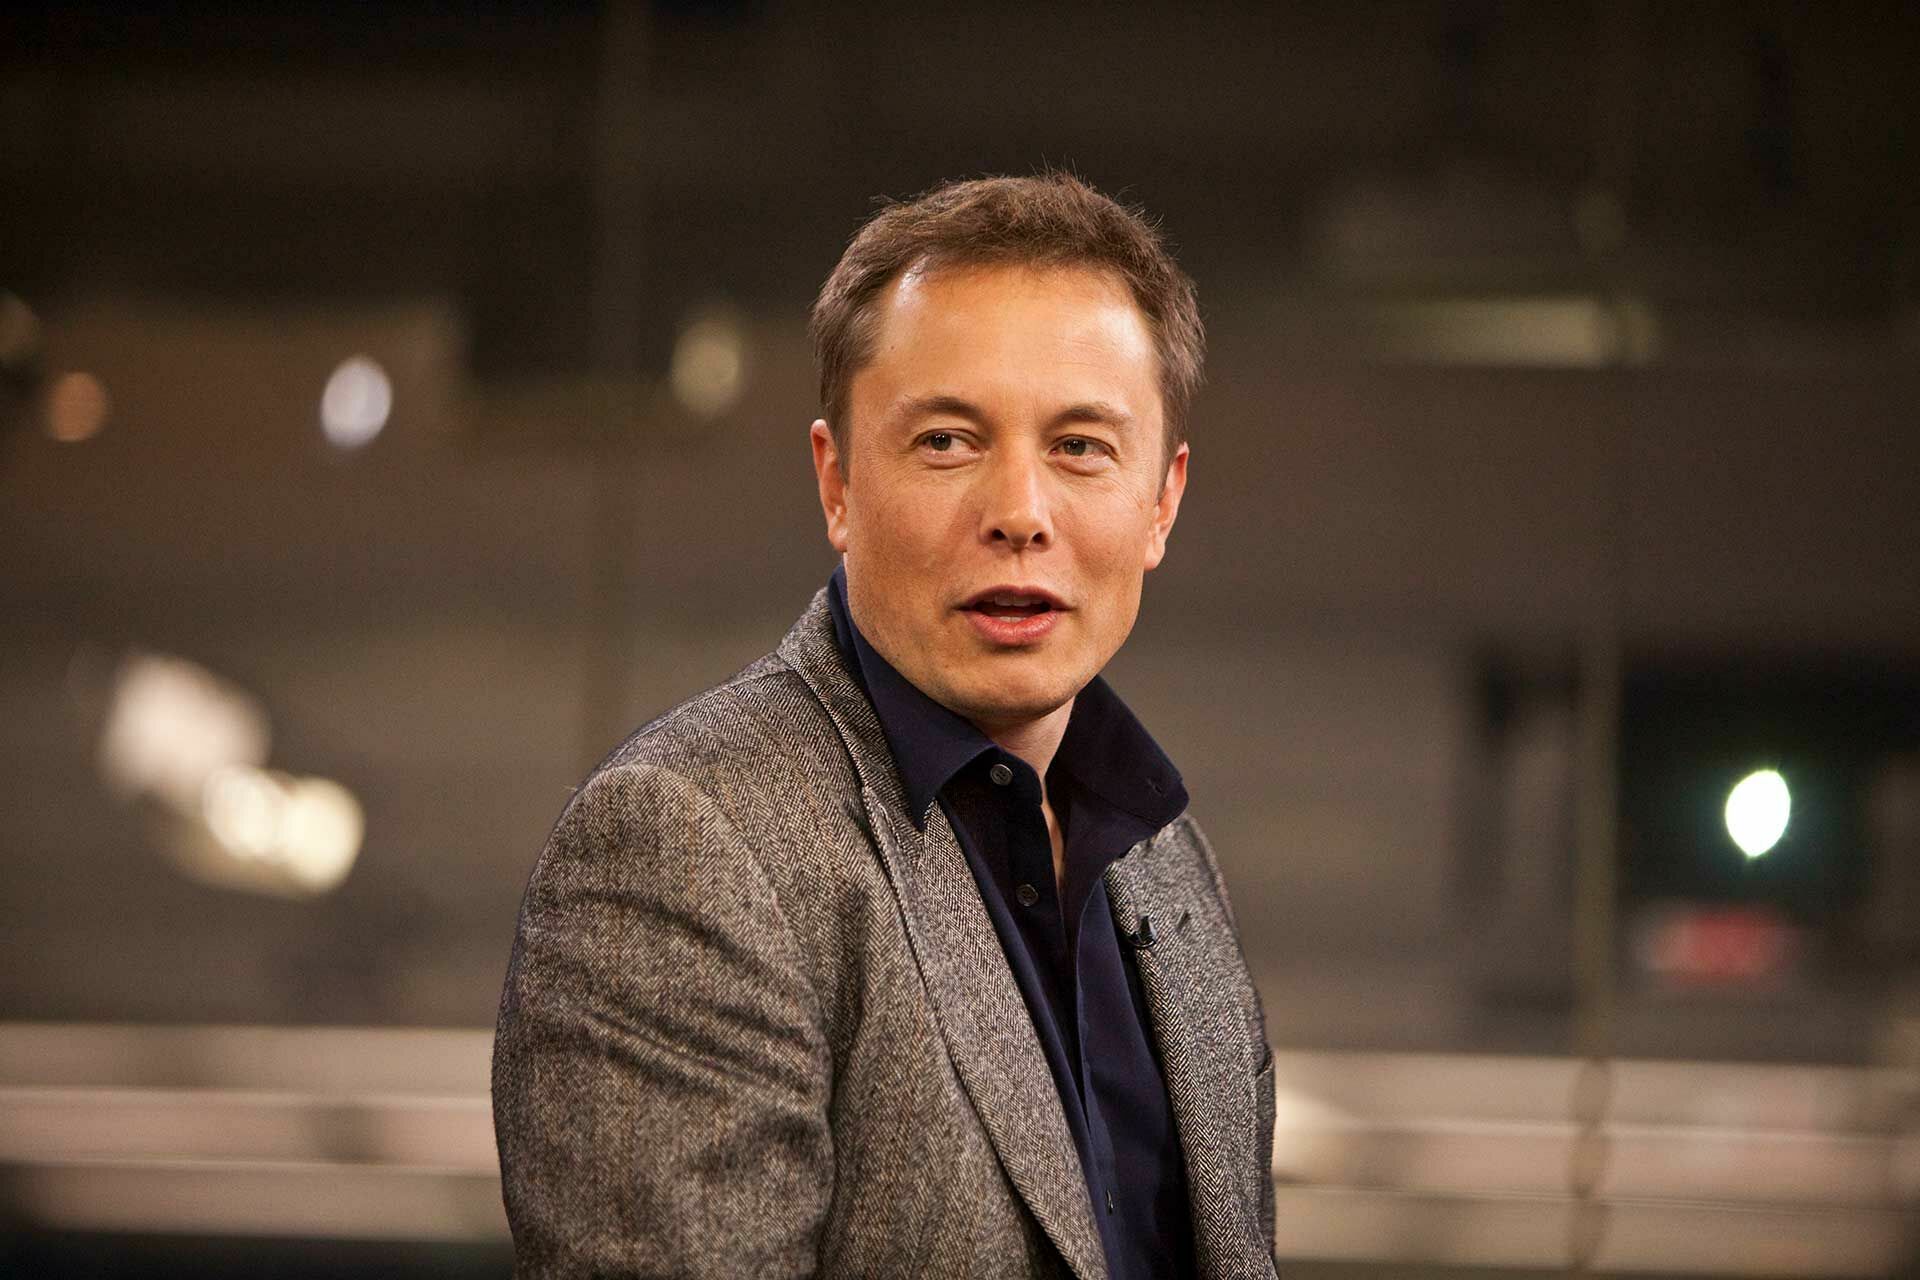 Elon Musk called self-isolation a “fascist” measure